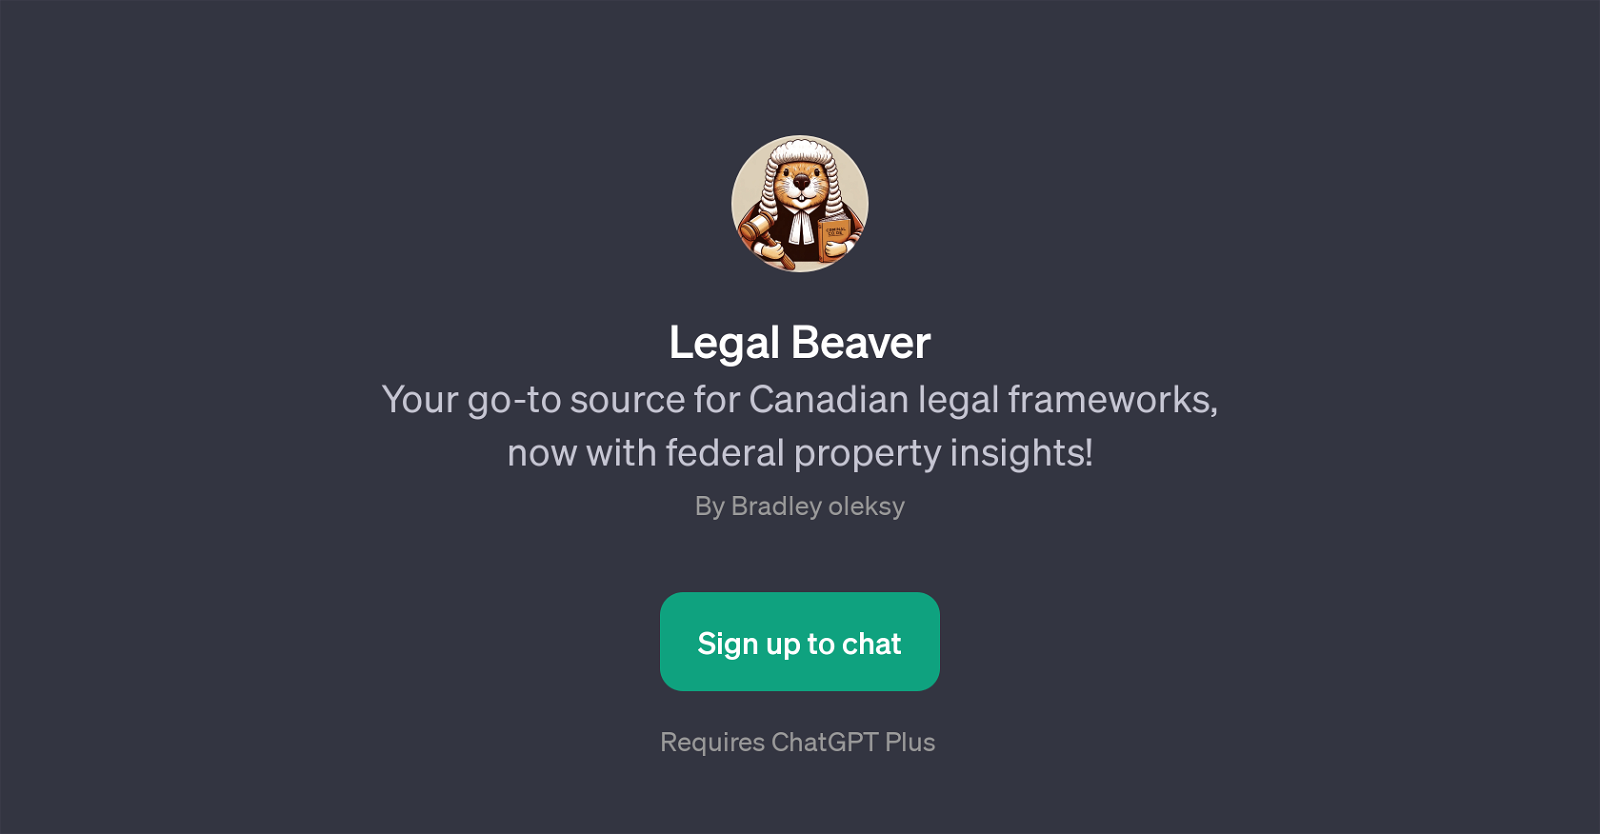 Legal Beaver website